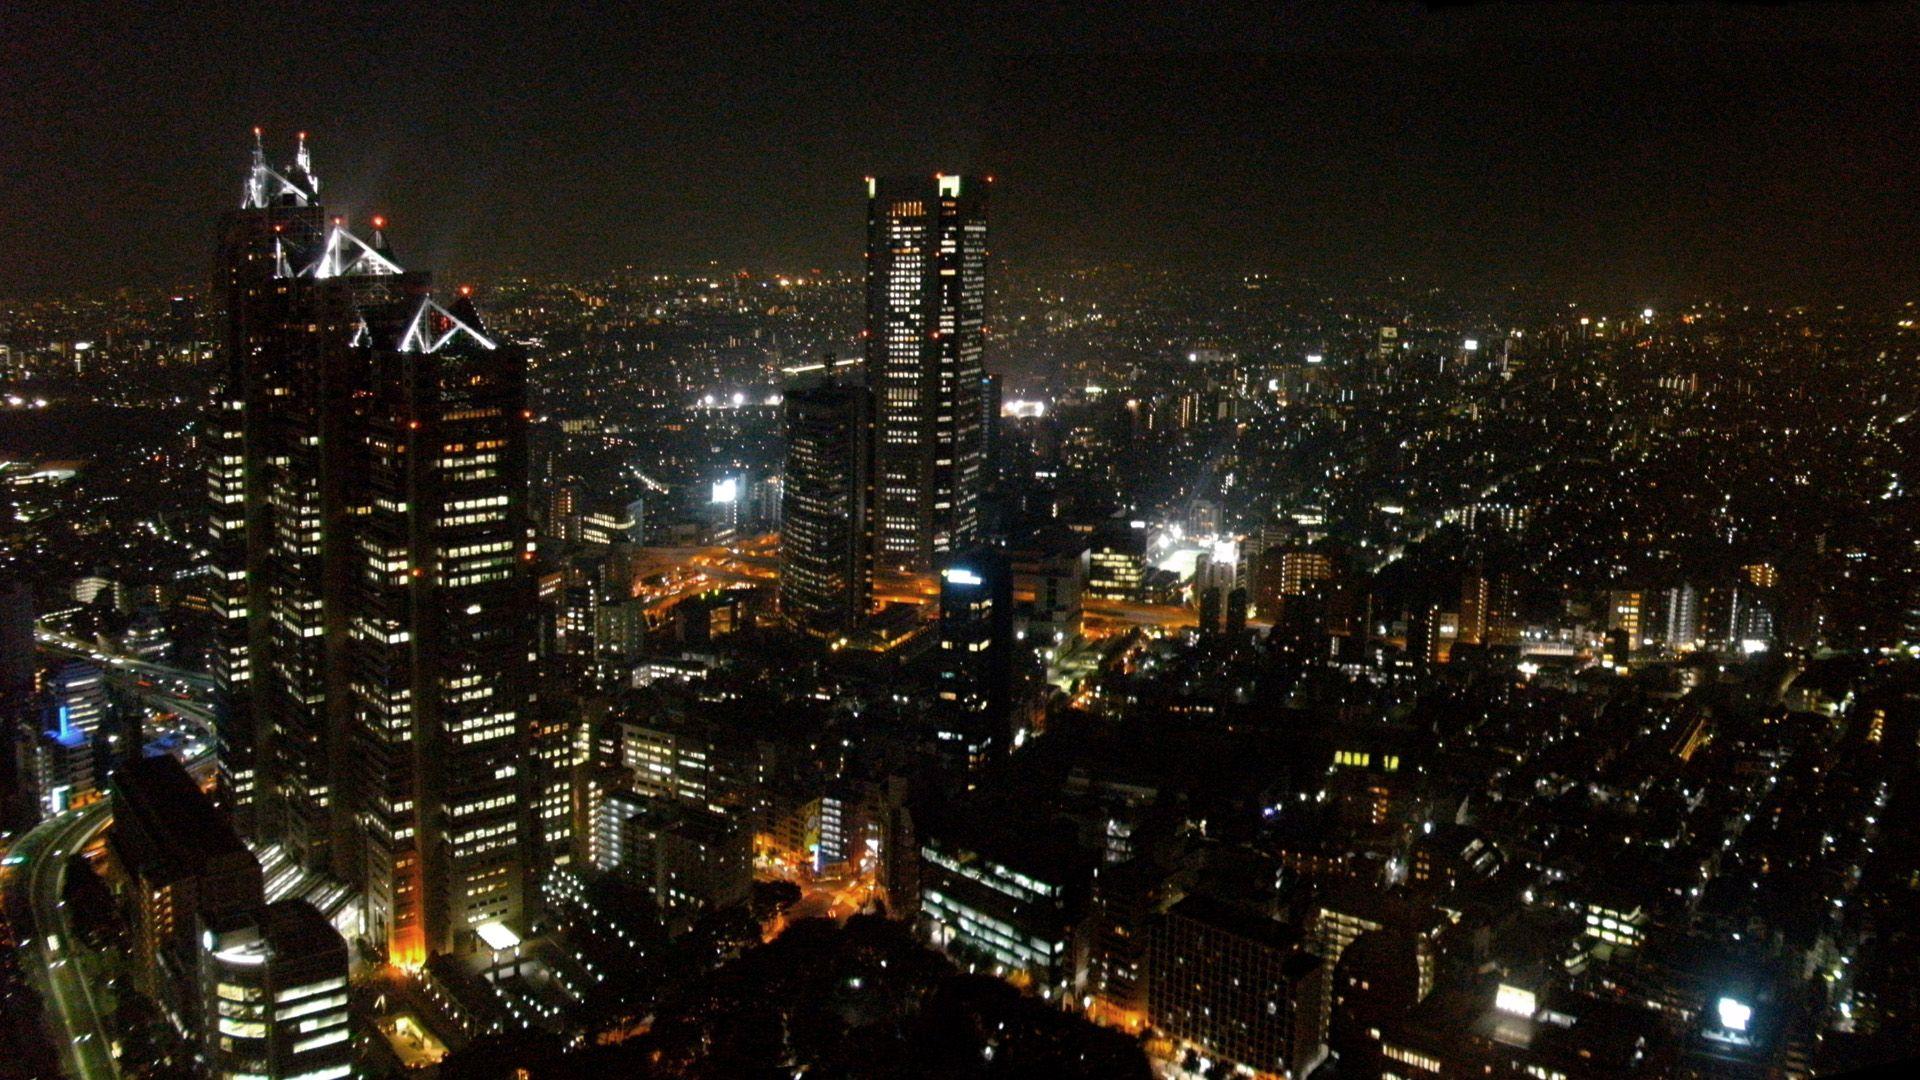 Tokyo Skyline at Night Wallpapers - Top Free Tokyo Skyline at Night ...